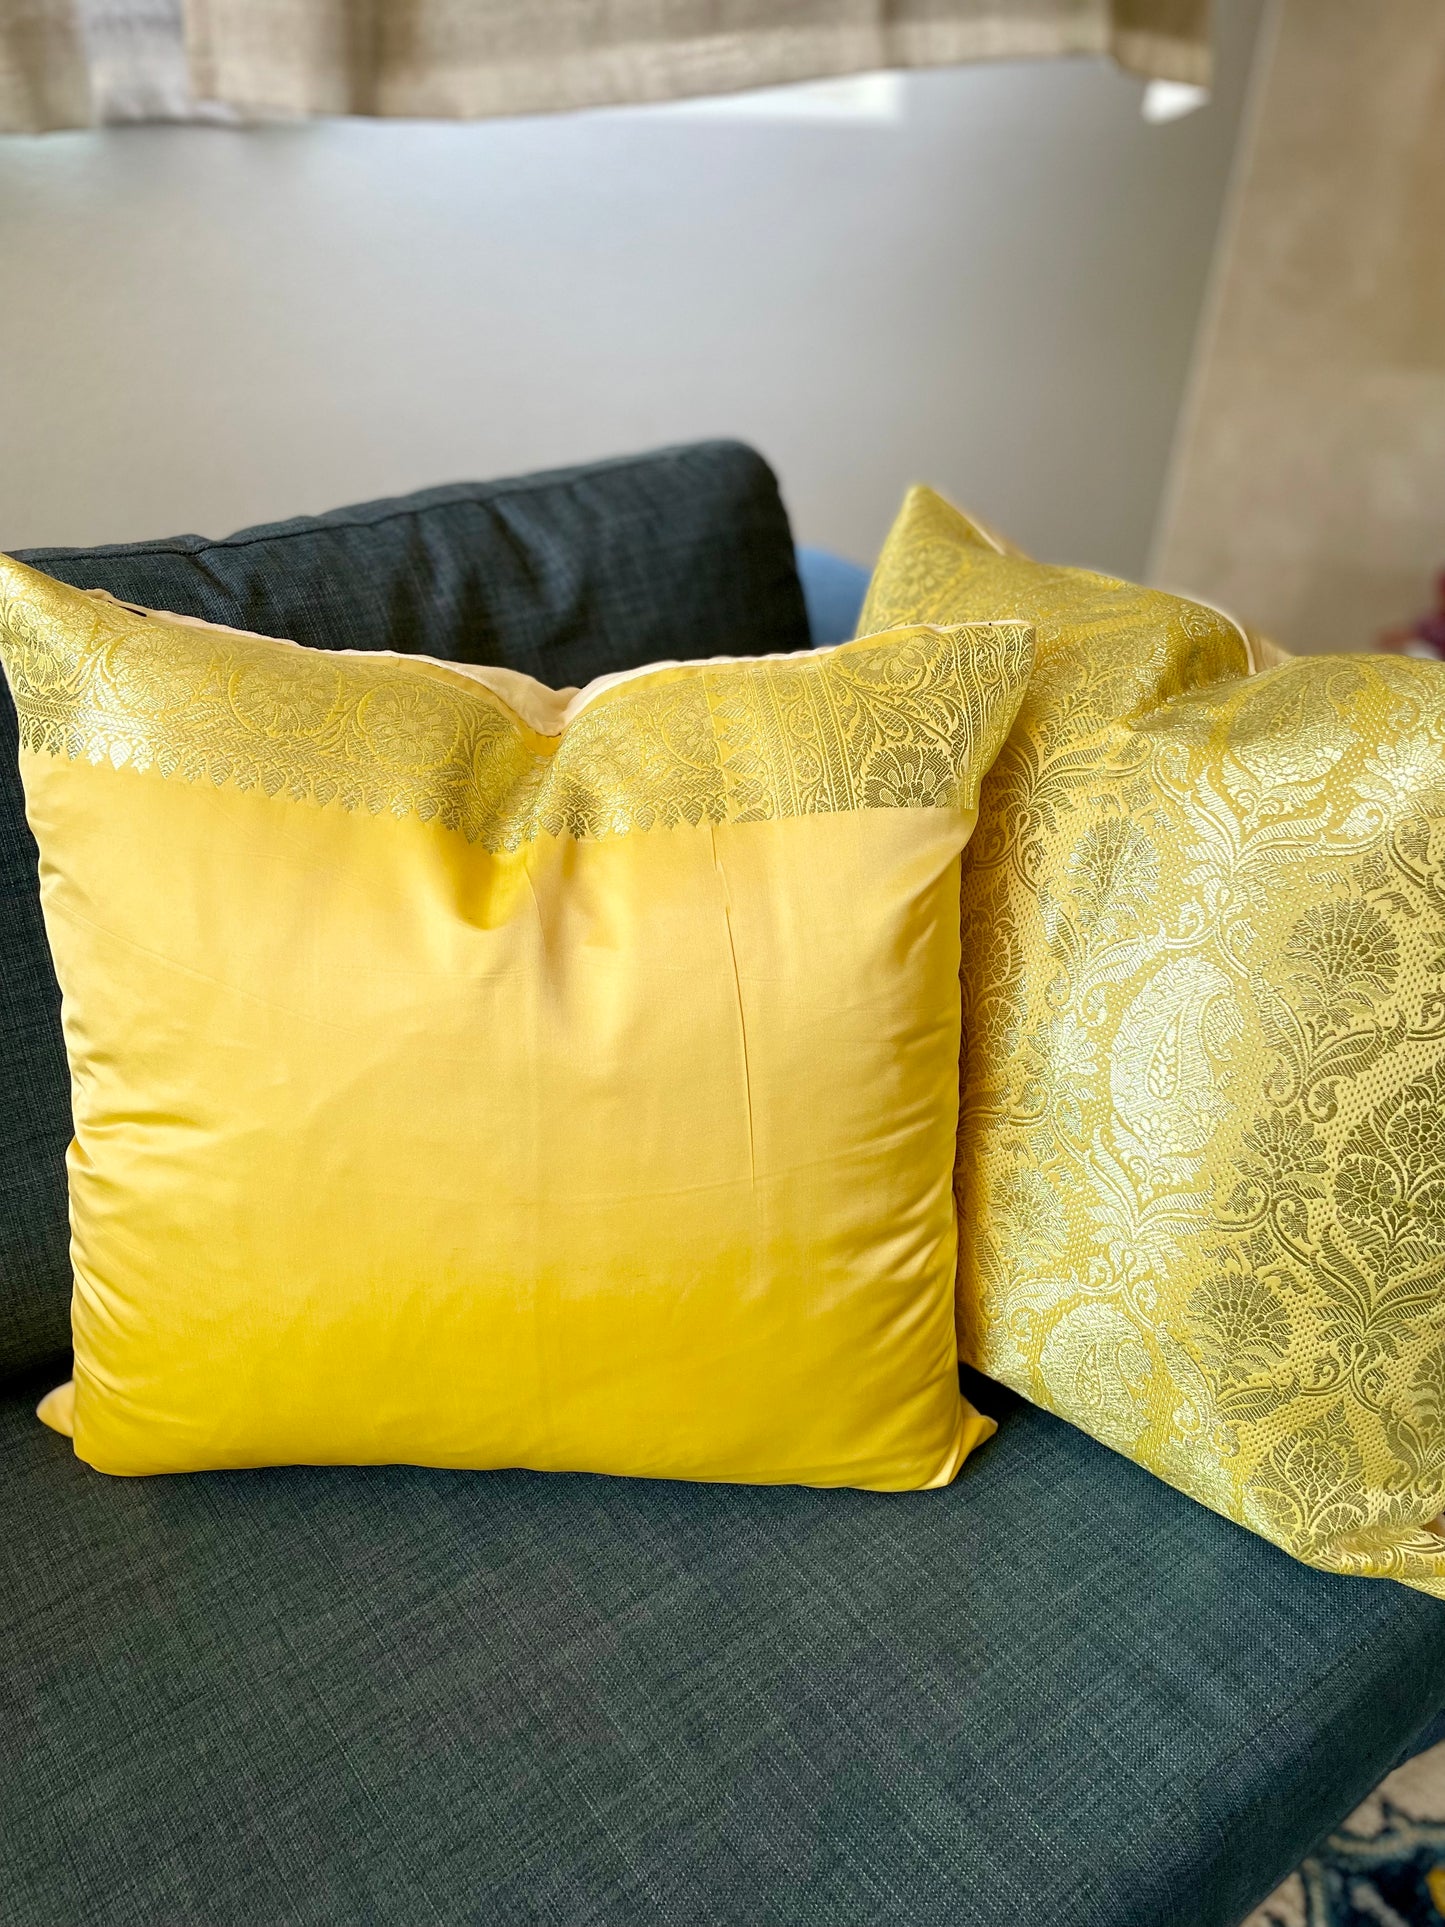 Lemon Yellow and Gold Cushions